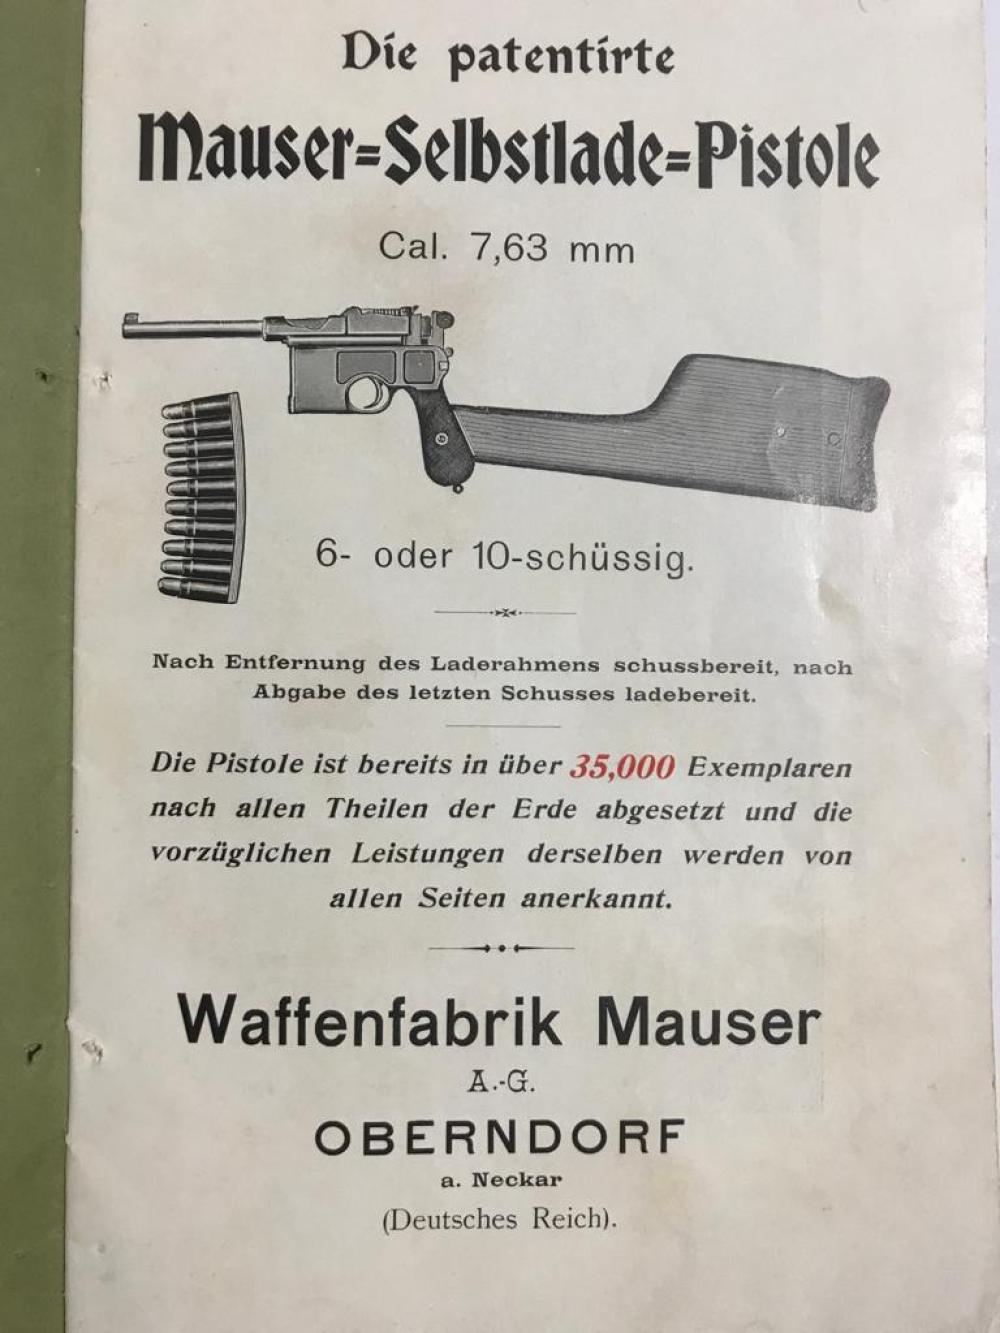 Die patentirte Mauser-Selbstlade-Pistole Caliber 7,63 mm